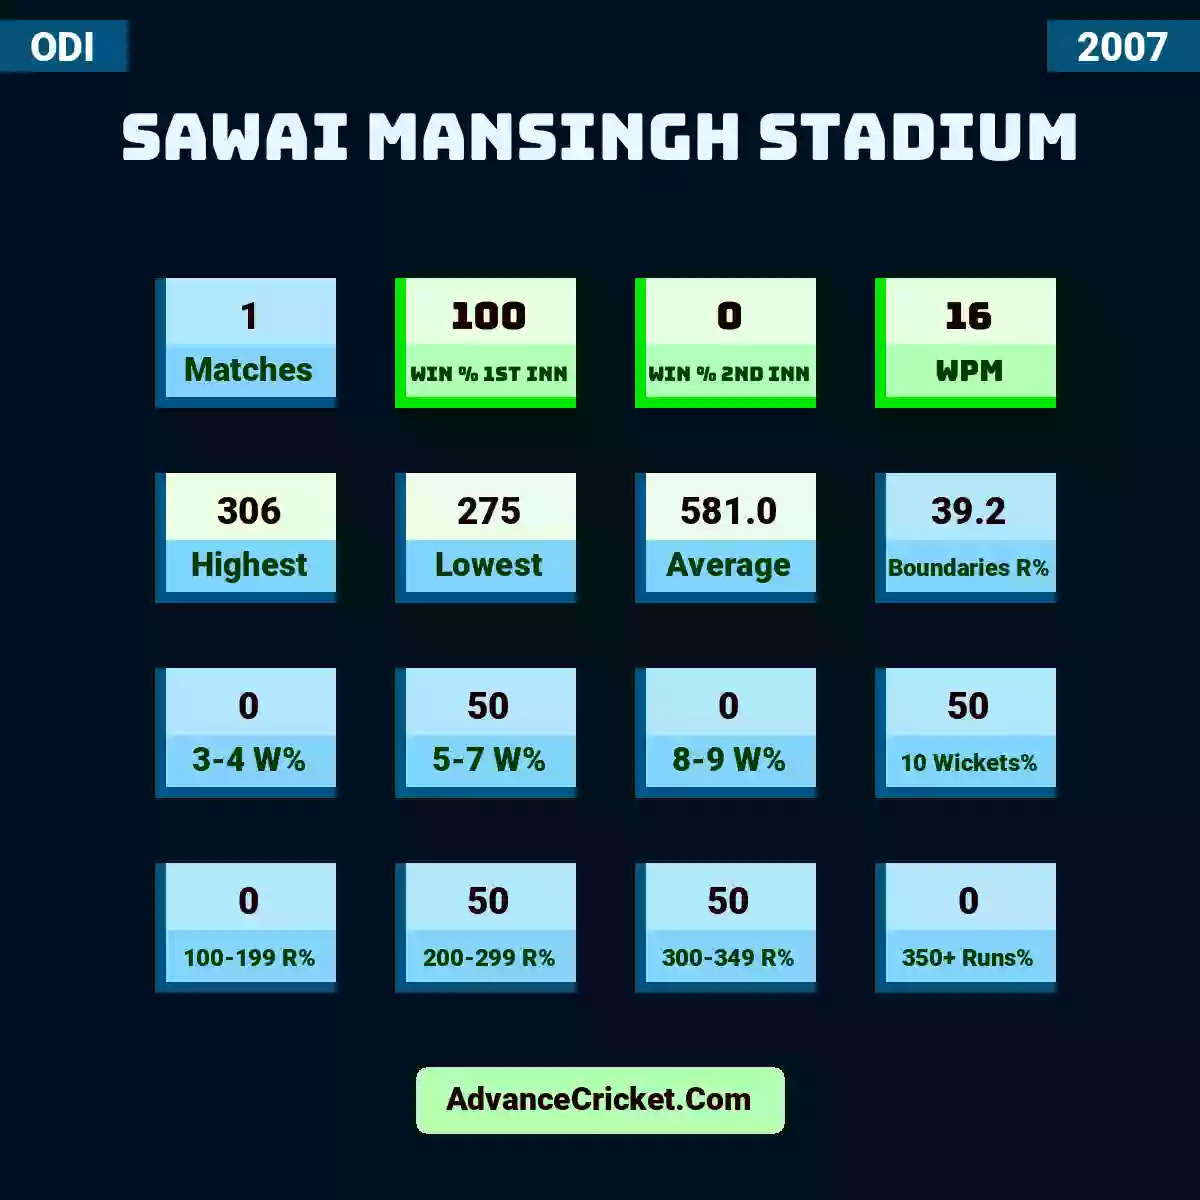 Image showing Sawai Mansingh Stadium with Matches: 1, Win % 1st Inn: 100, Win % 2nd Inn: 0, WPM: 16, Highest: 306, Lowest: 275, Average: 581.0, Boundaries R%: 39.2, 3-4 W%: 0, 5-7 W%: 50, 8-9 W%: 0, 10 Wickets%: 50, 100-199 R%: 0, 200-299 R%: 50, 300-349 R%: 50, 350+ Runs%: 0.